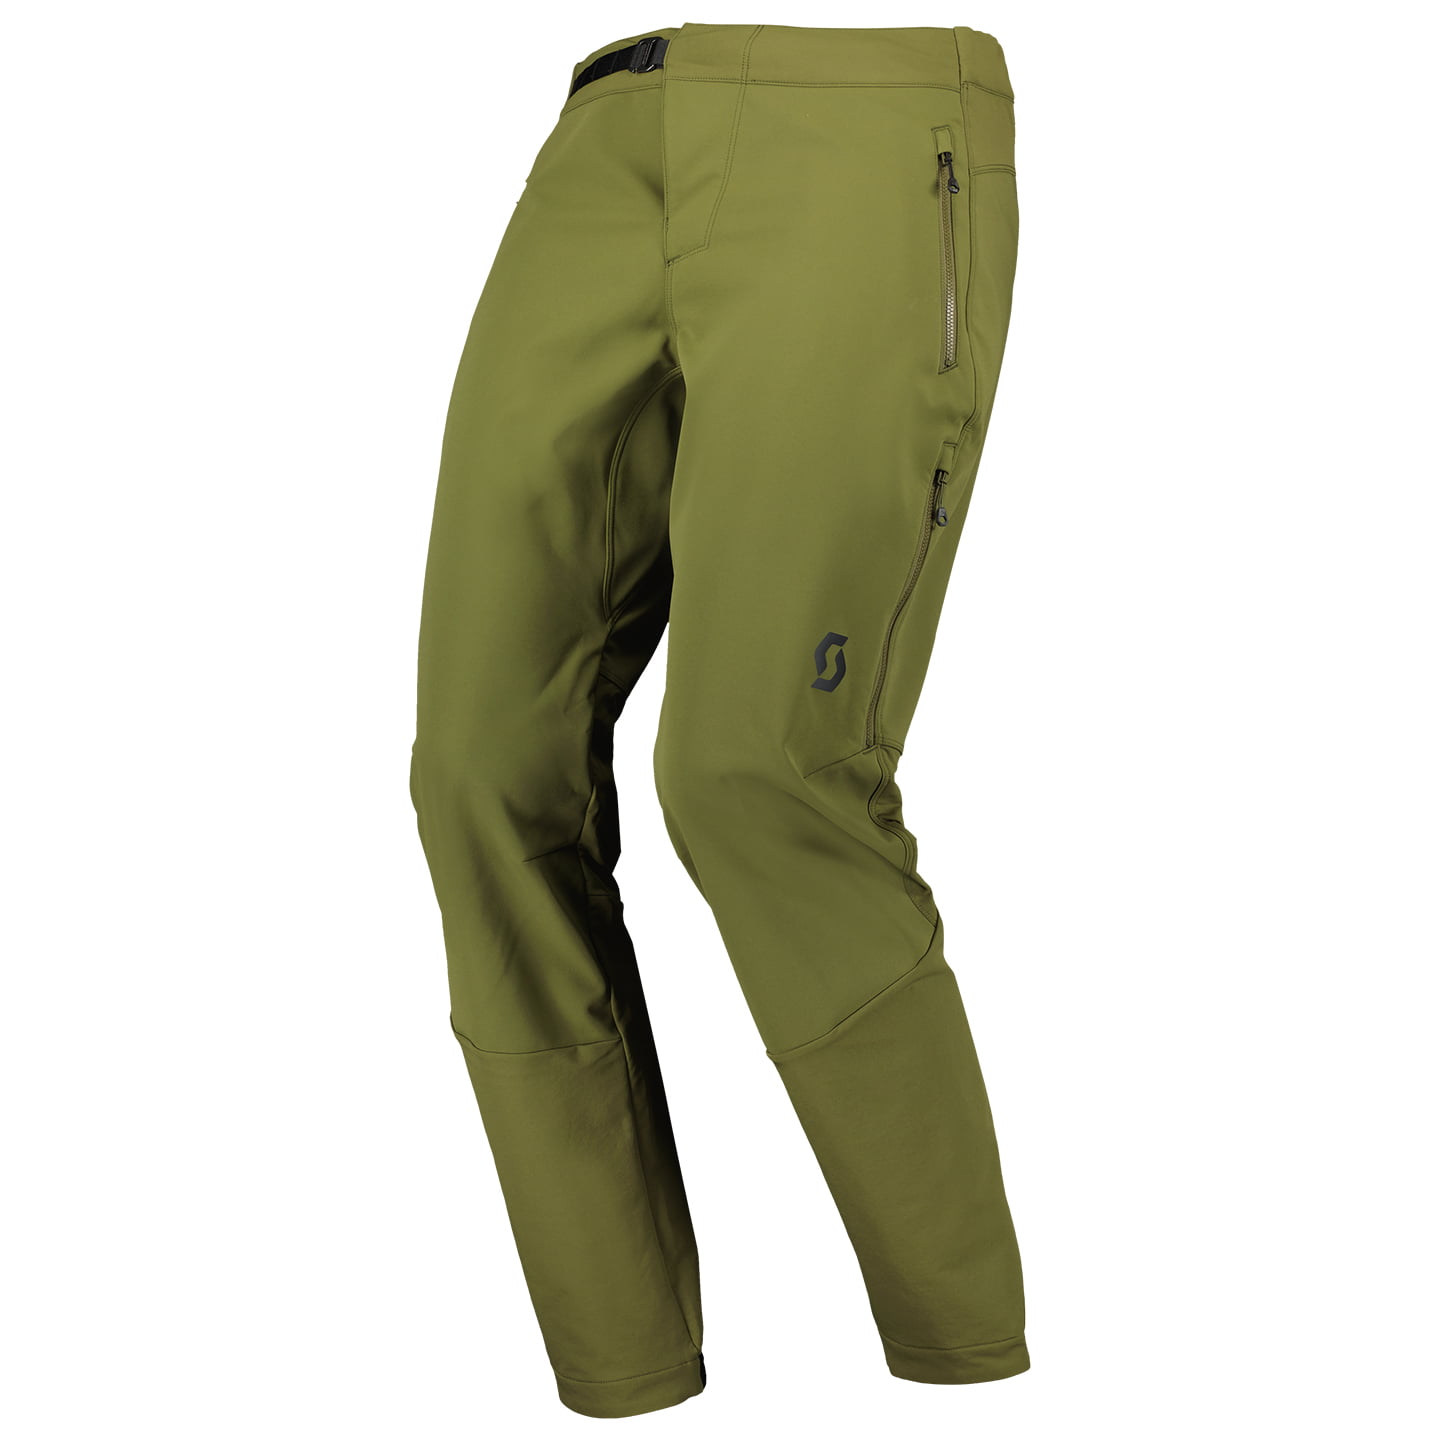 SCOTT long bike pants without pad Trail Storm Hybrid Long Bike Pants, for men, size L, Cycle trousers, Cycle gear